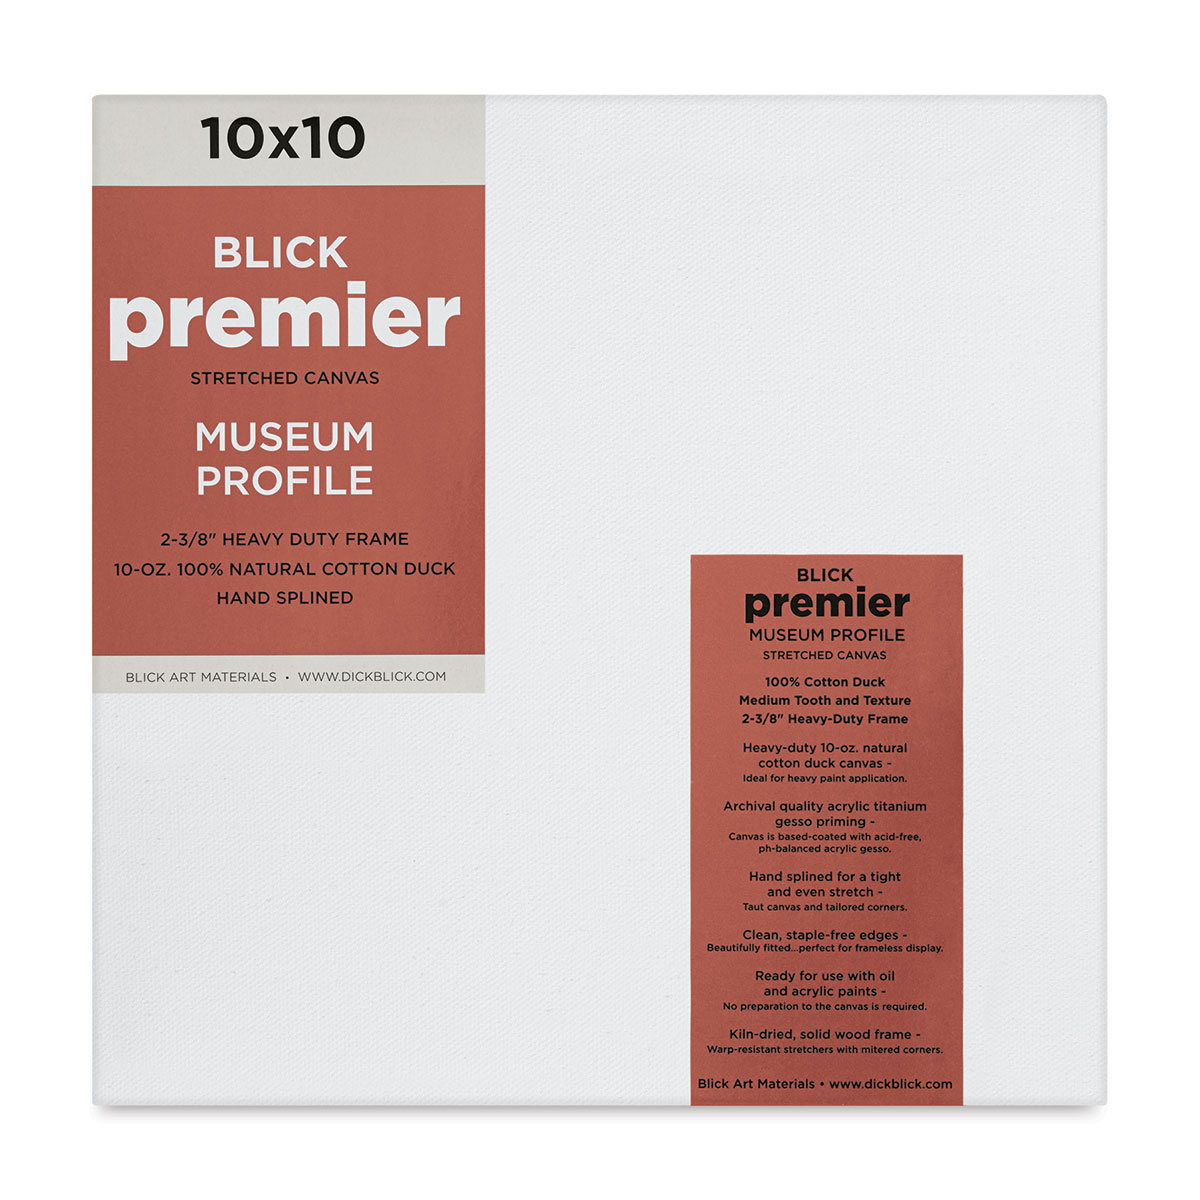 Blick Premier Stretched Cotton Canvas - Gallery Profile, Splined, 6 x 6